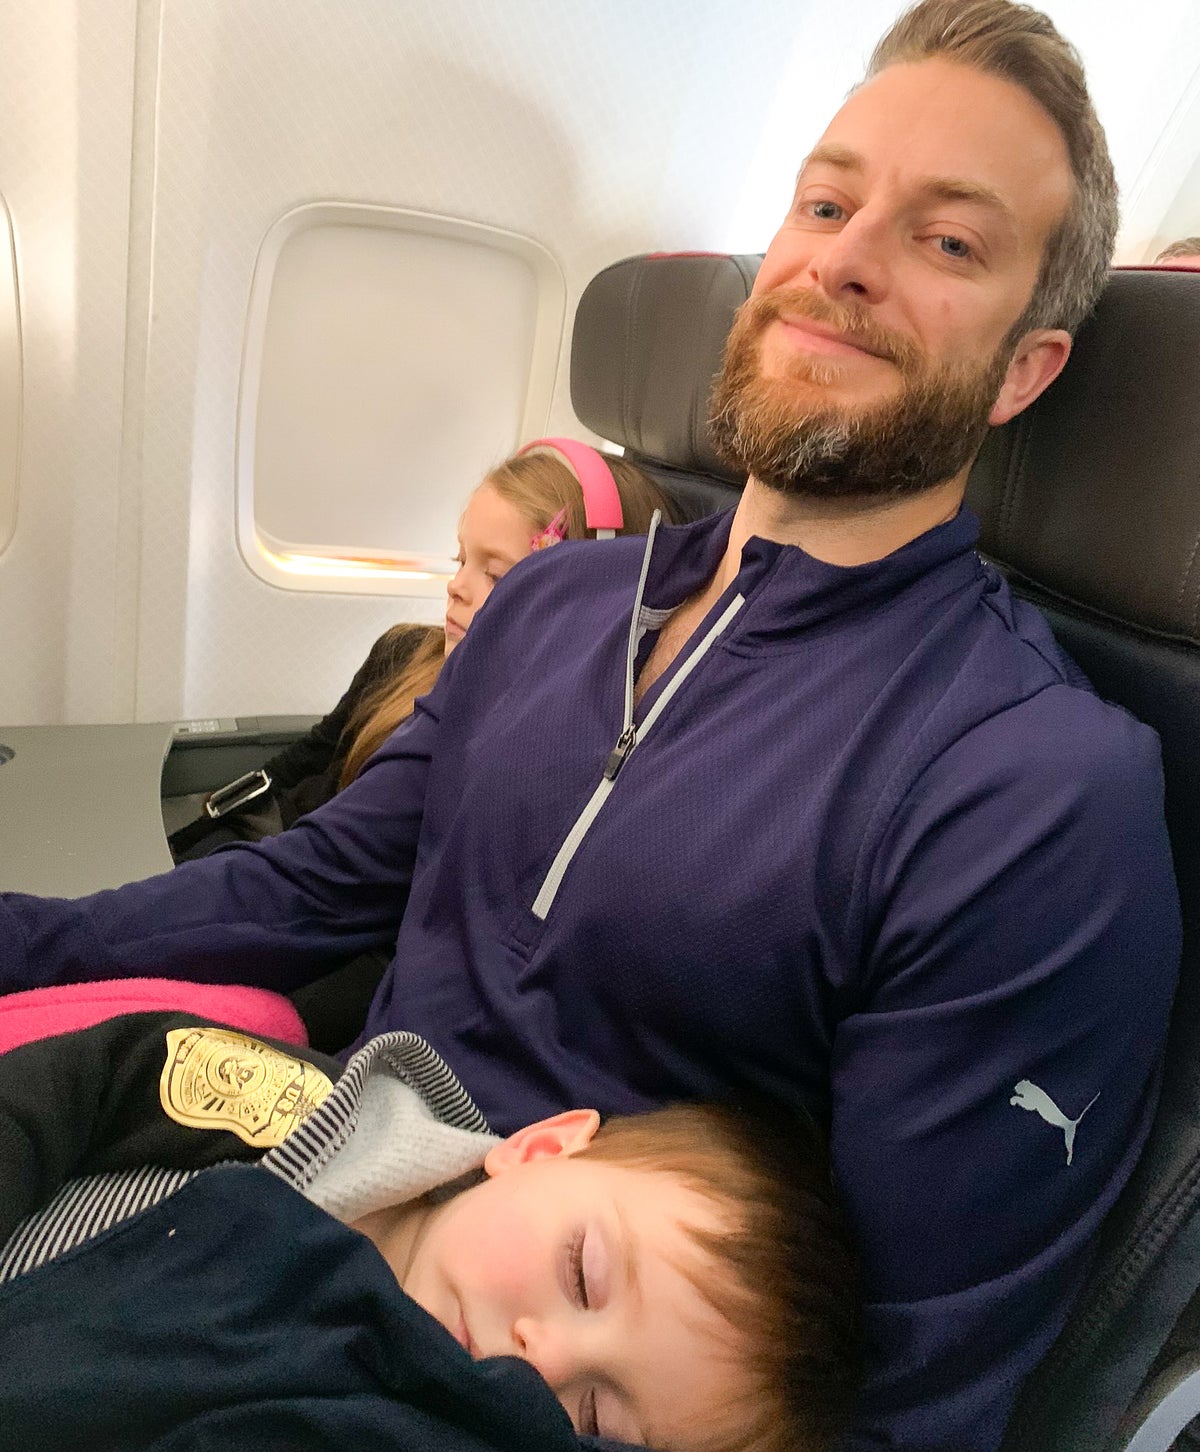 American Airlines Economy Sleeping Lap Child